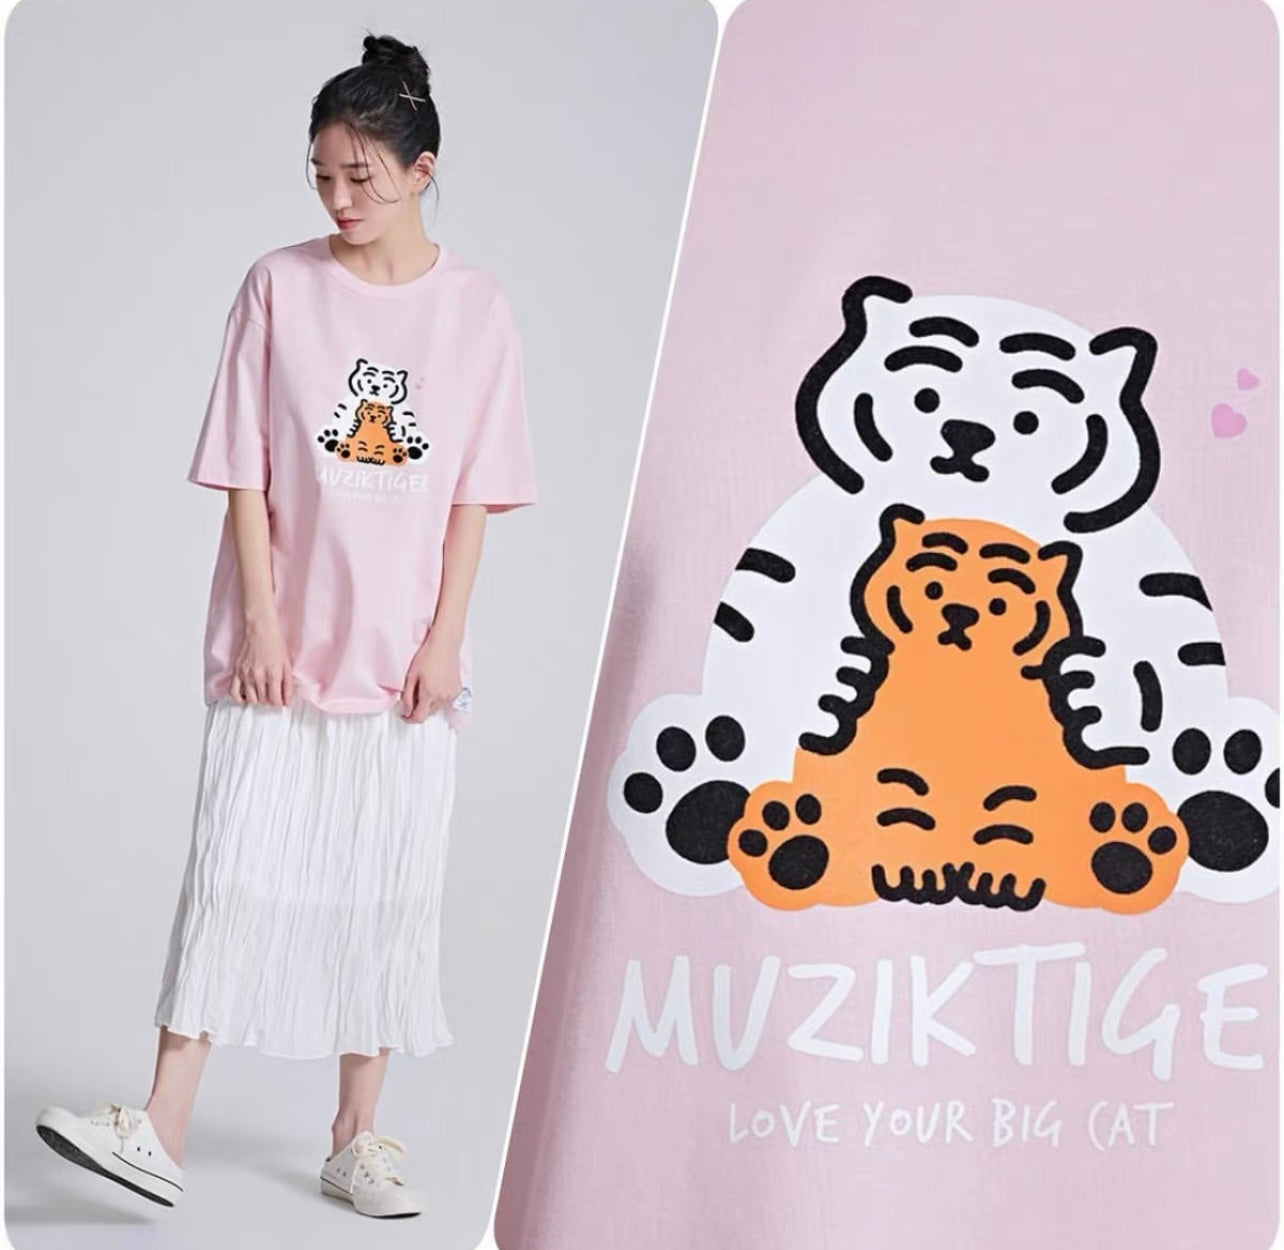 SPAO Muzik Tiger This Year's Star Is T-Shirt (Light Pink)